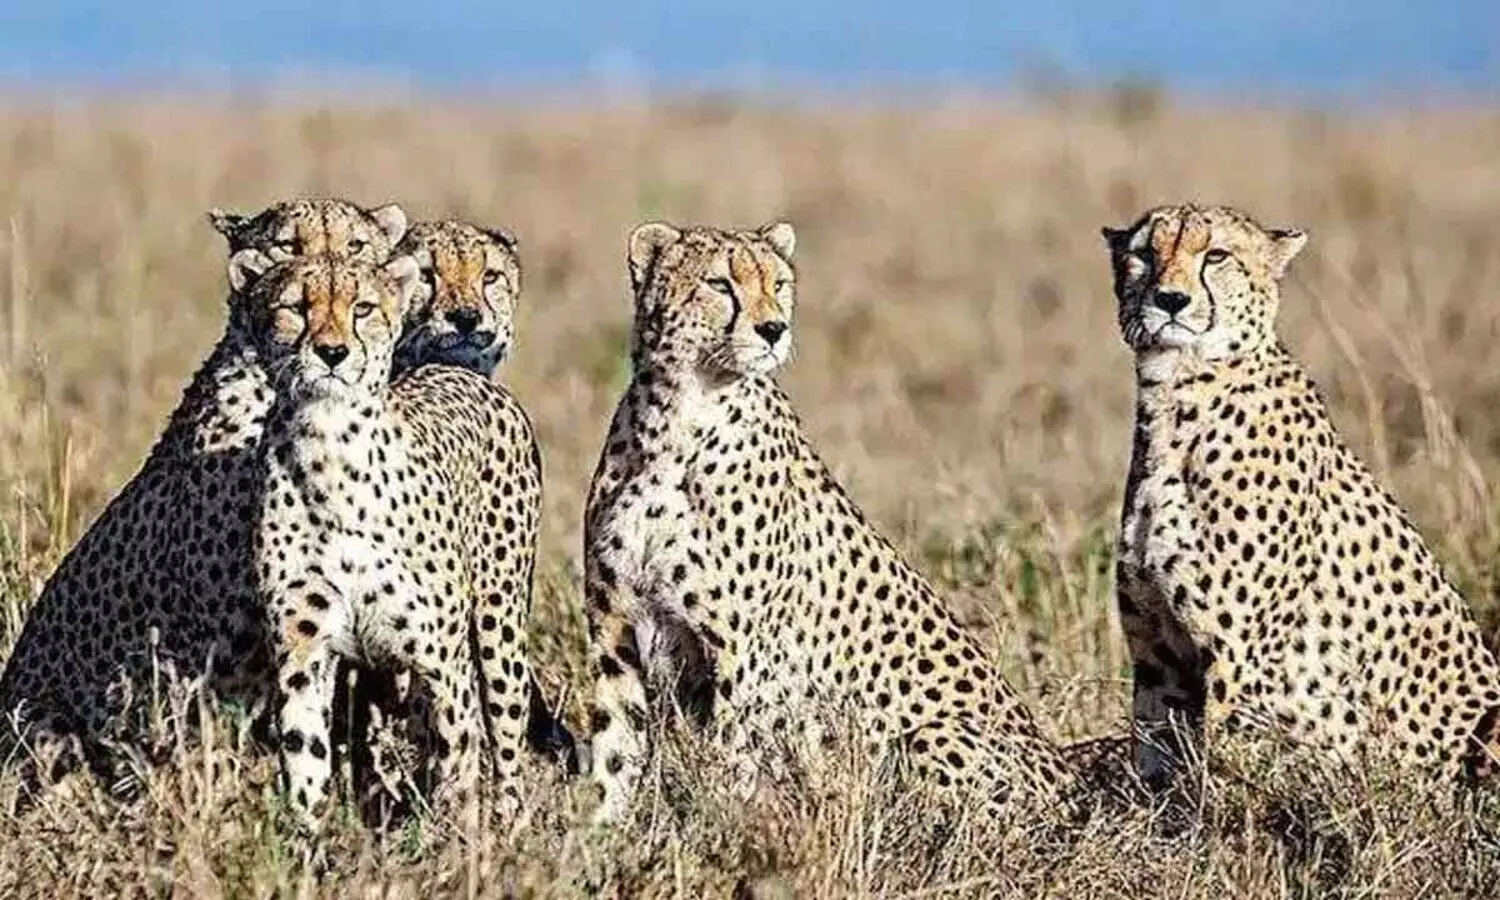 Cheetahs in India